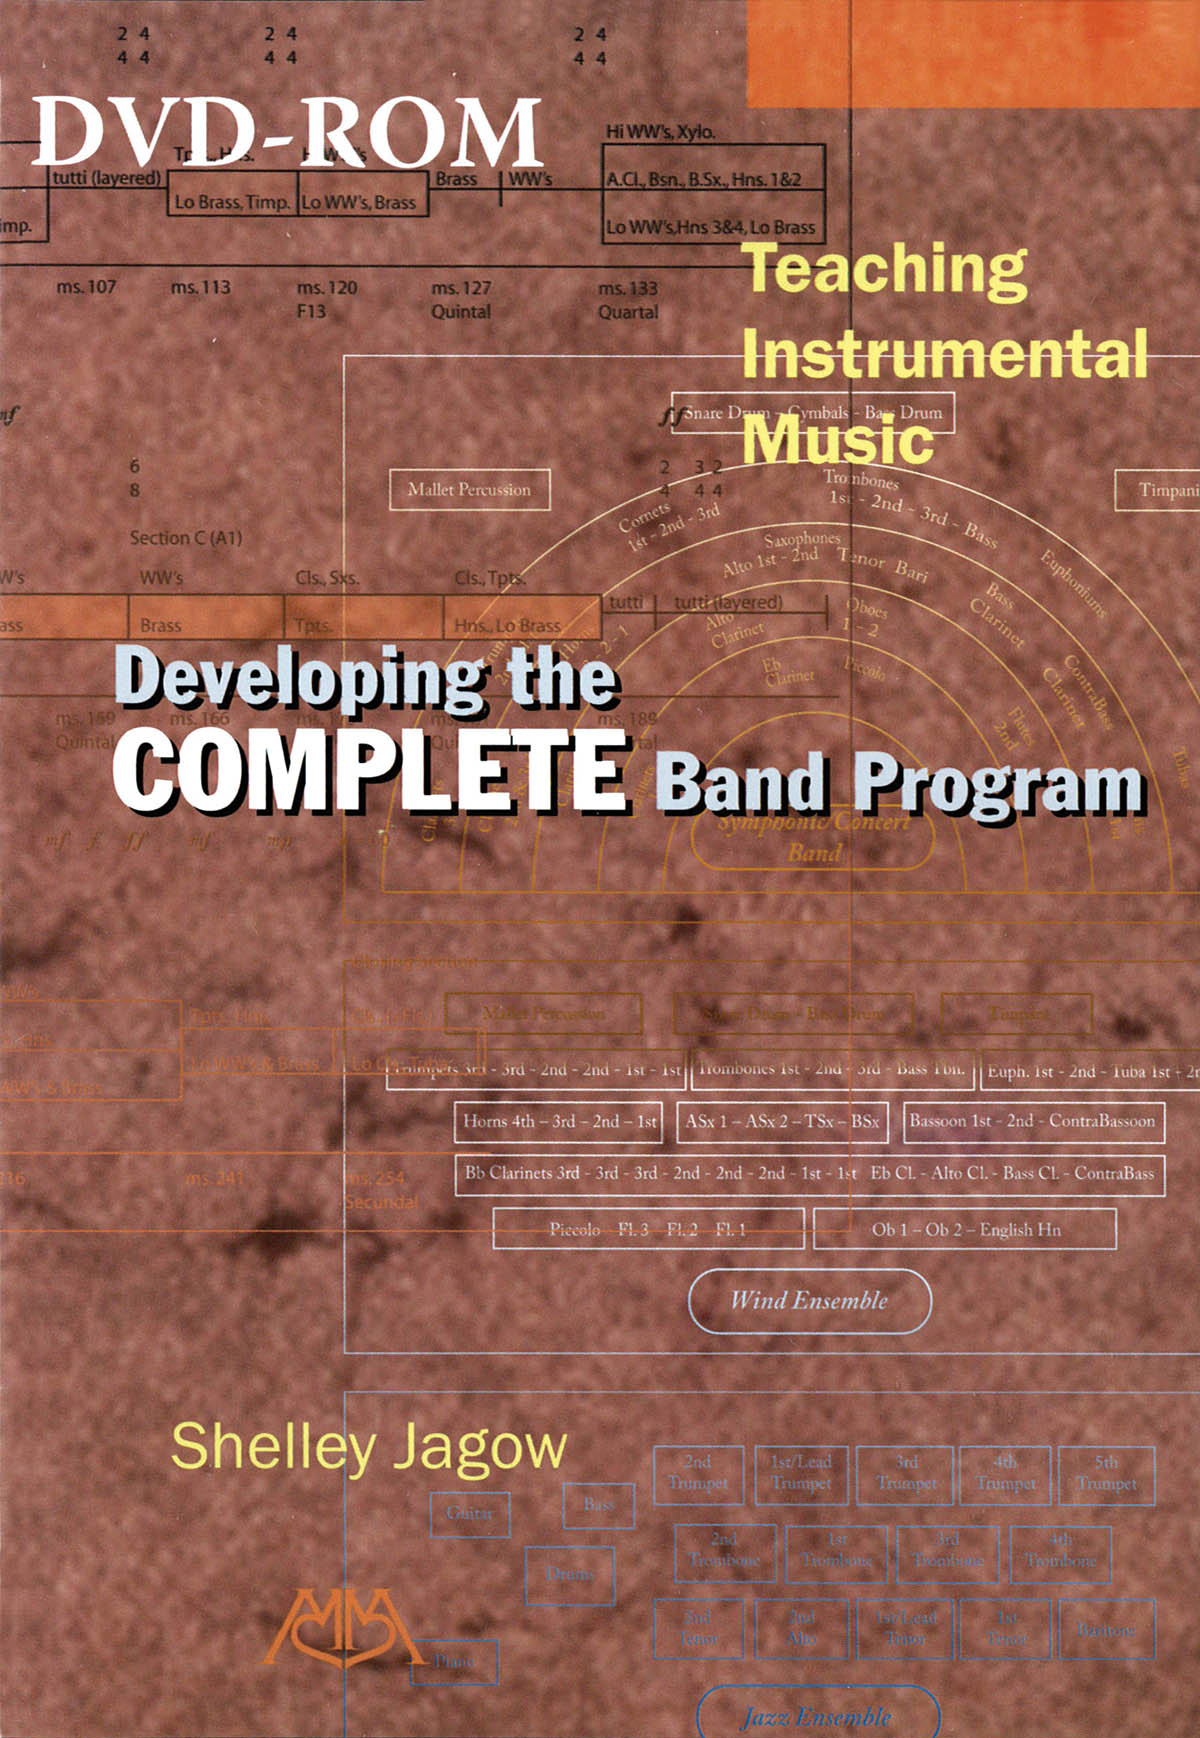 Teaching Instrumental Music: Reference Books: DVD